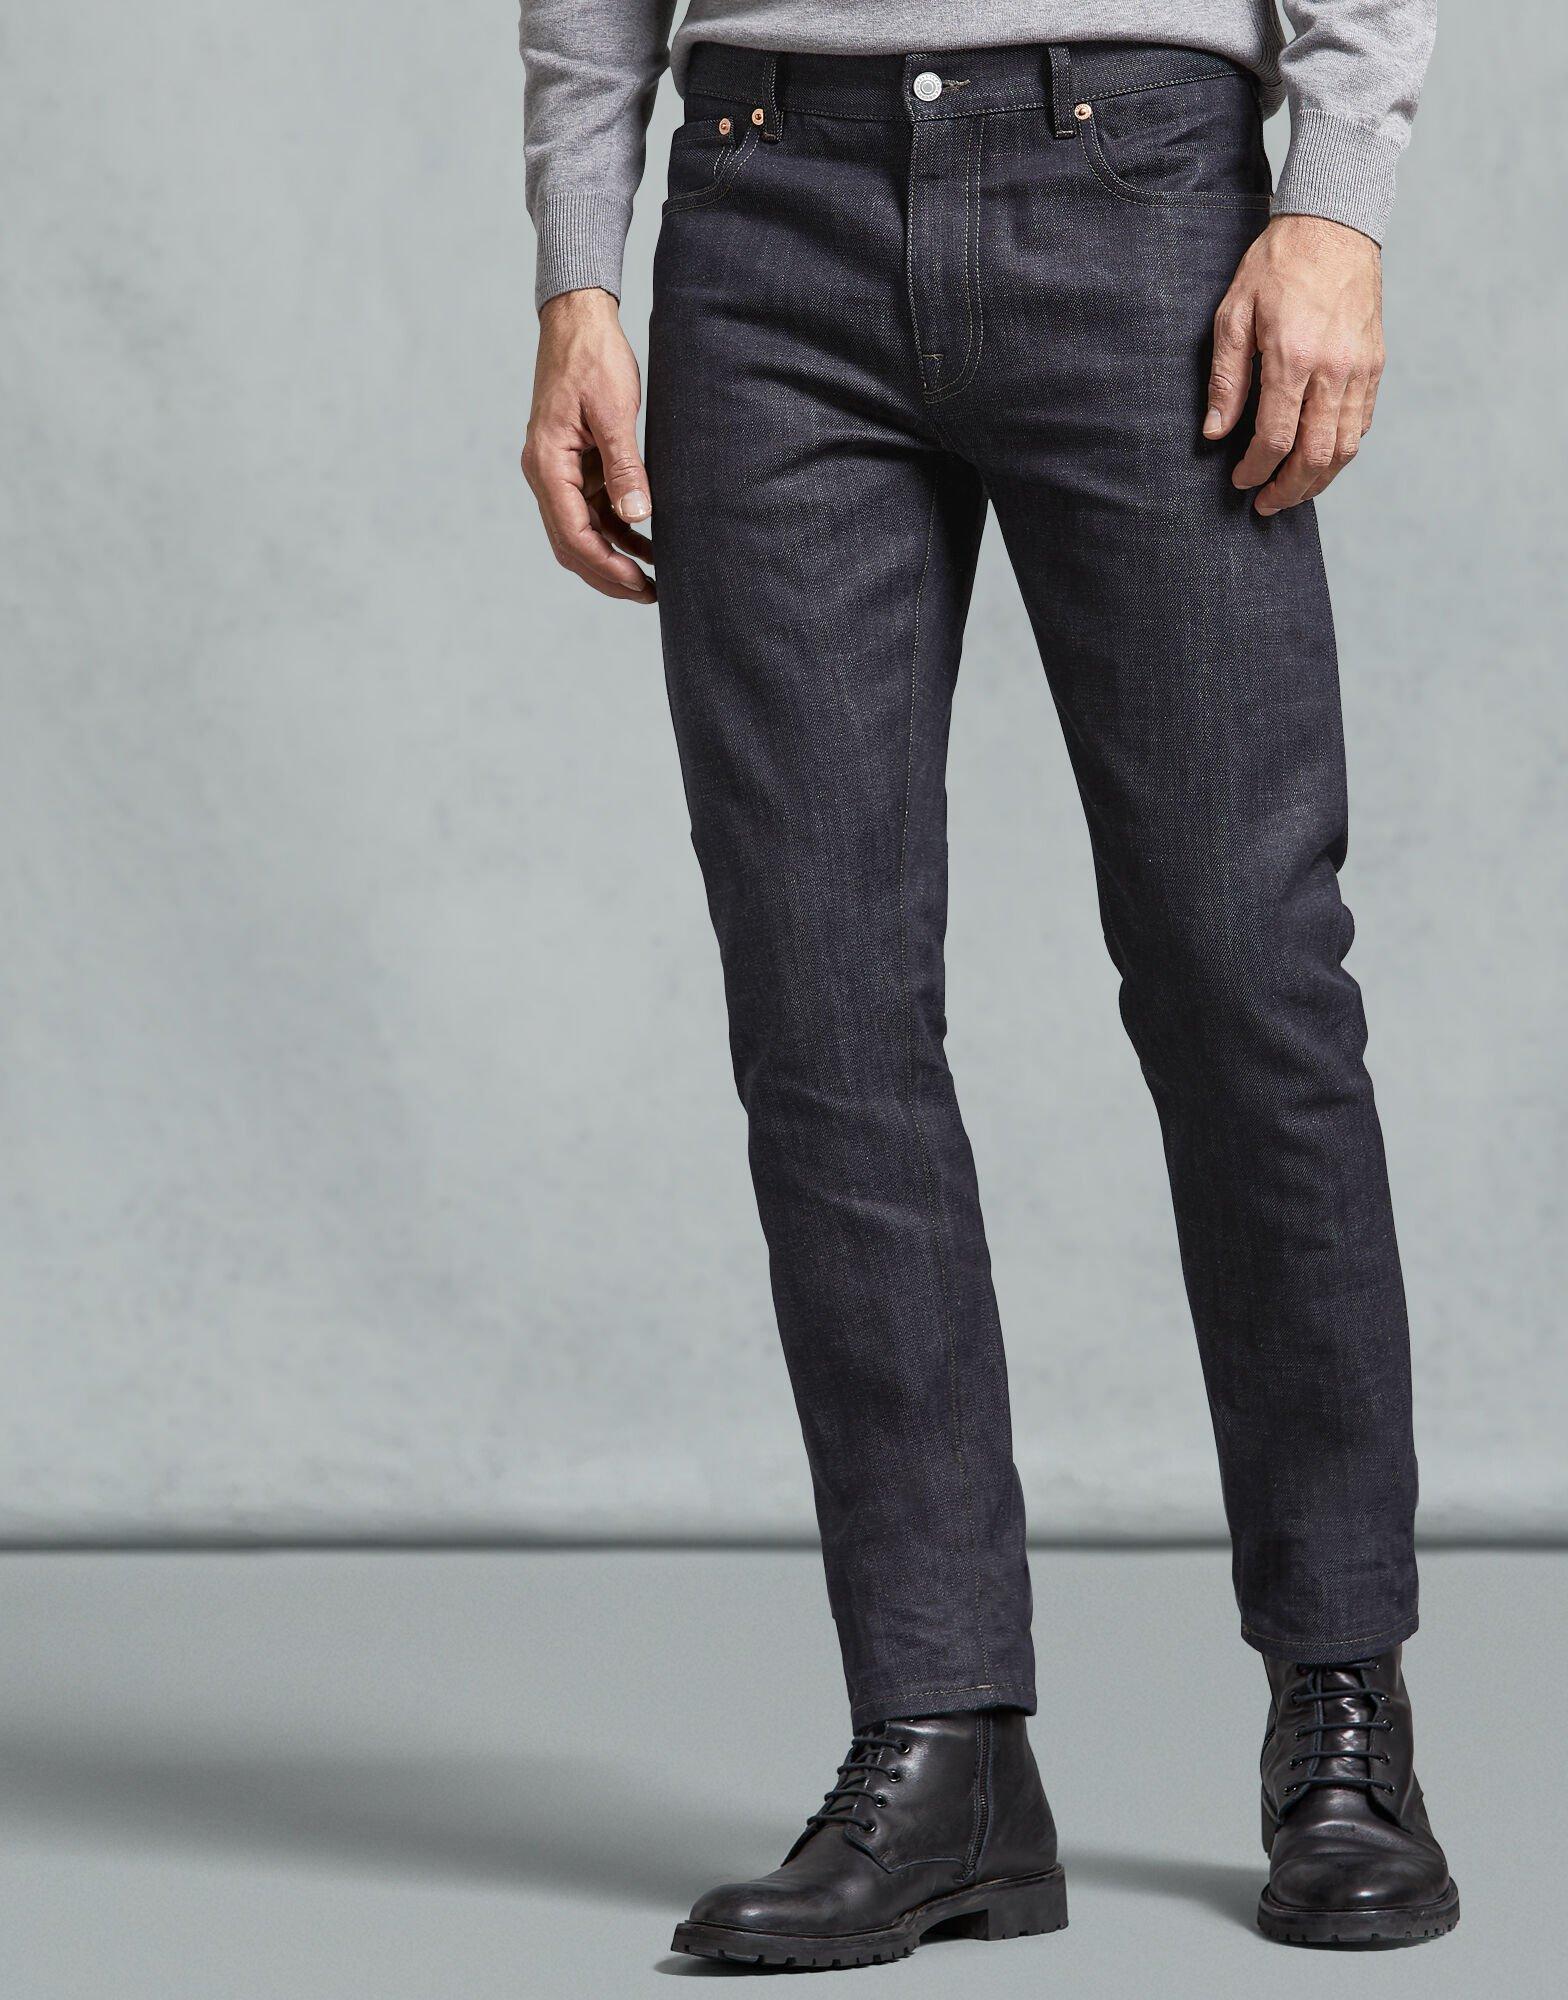 Belstaff Denim Longton Slim Jeans in Indigo (Blue) for Men - Lyst